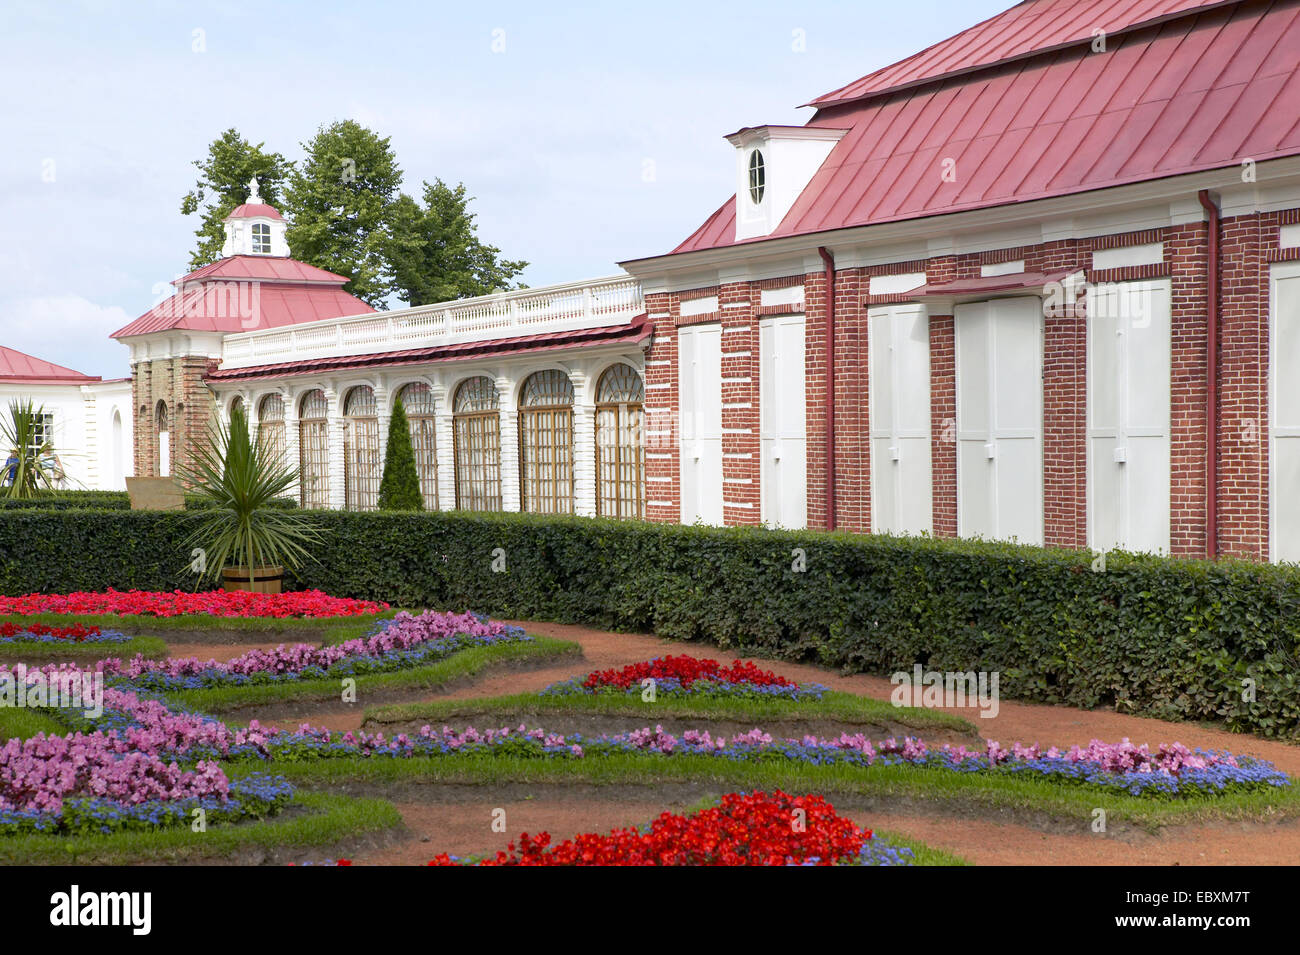 Saint Petersburg, Peters summer palace Stock Photo